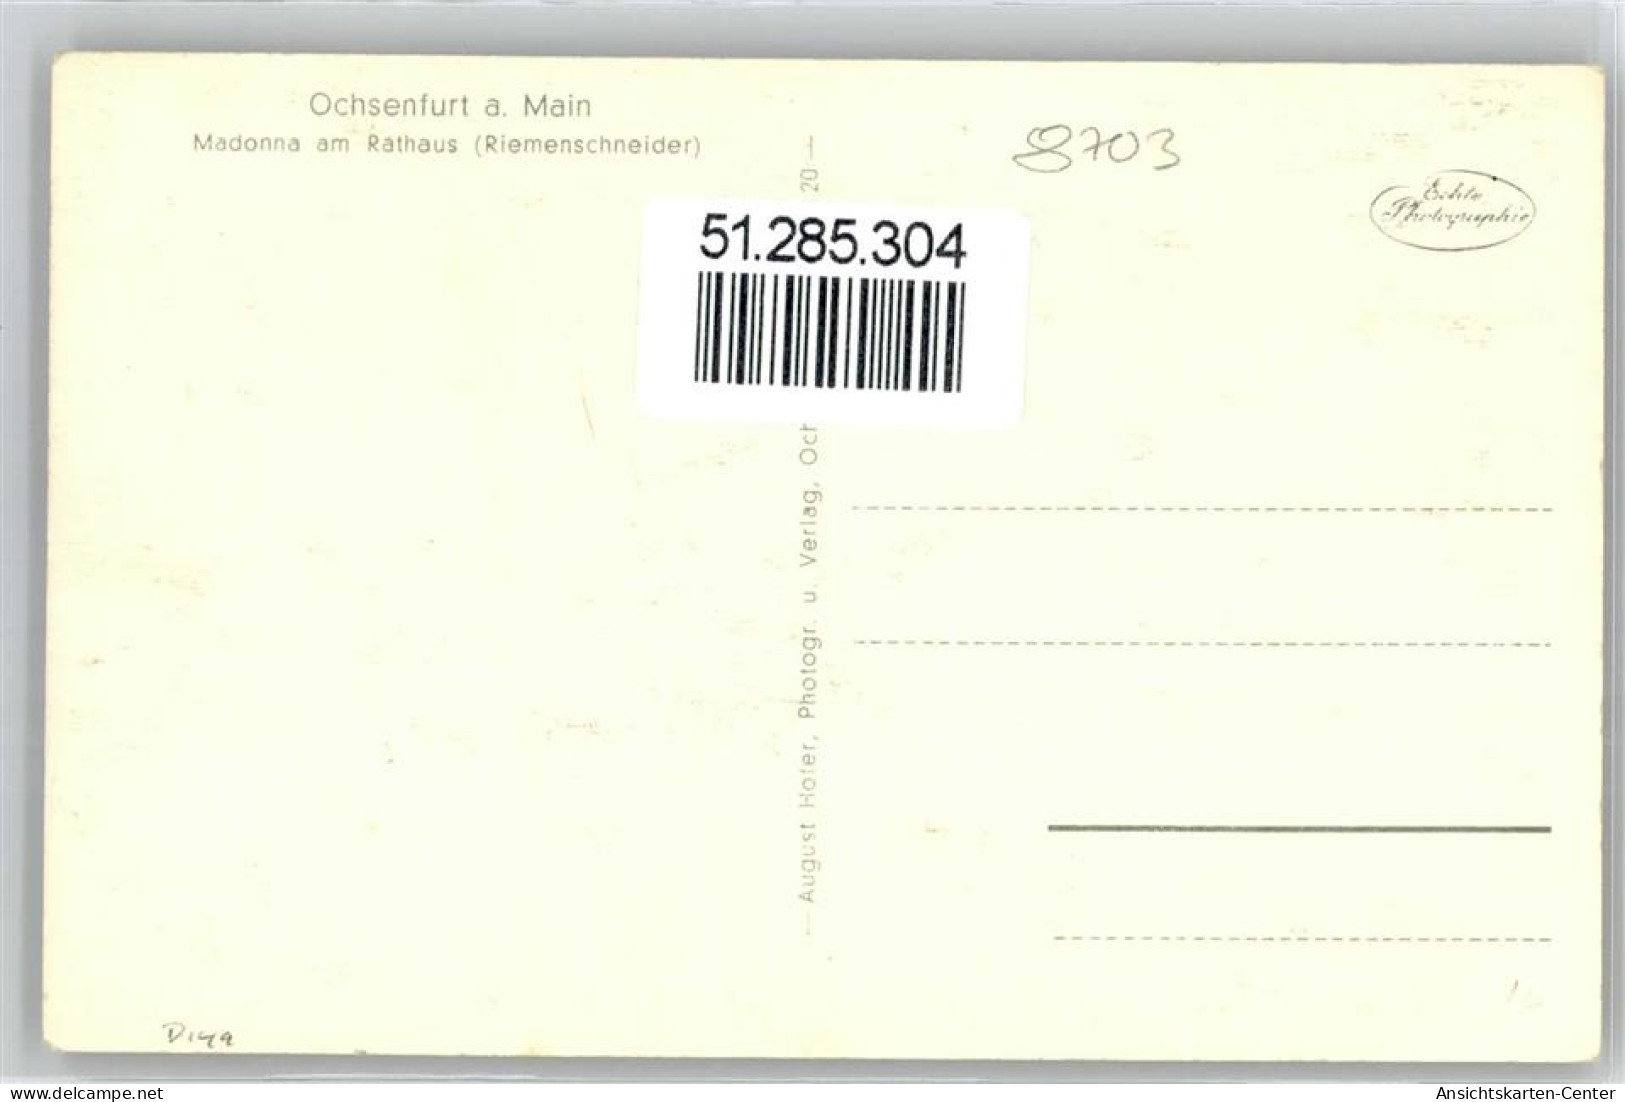 51285304 - Ochsenfurt - Ochsenfurt